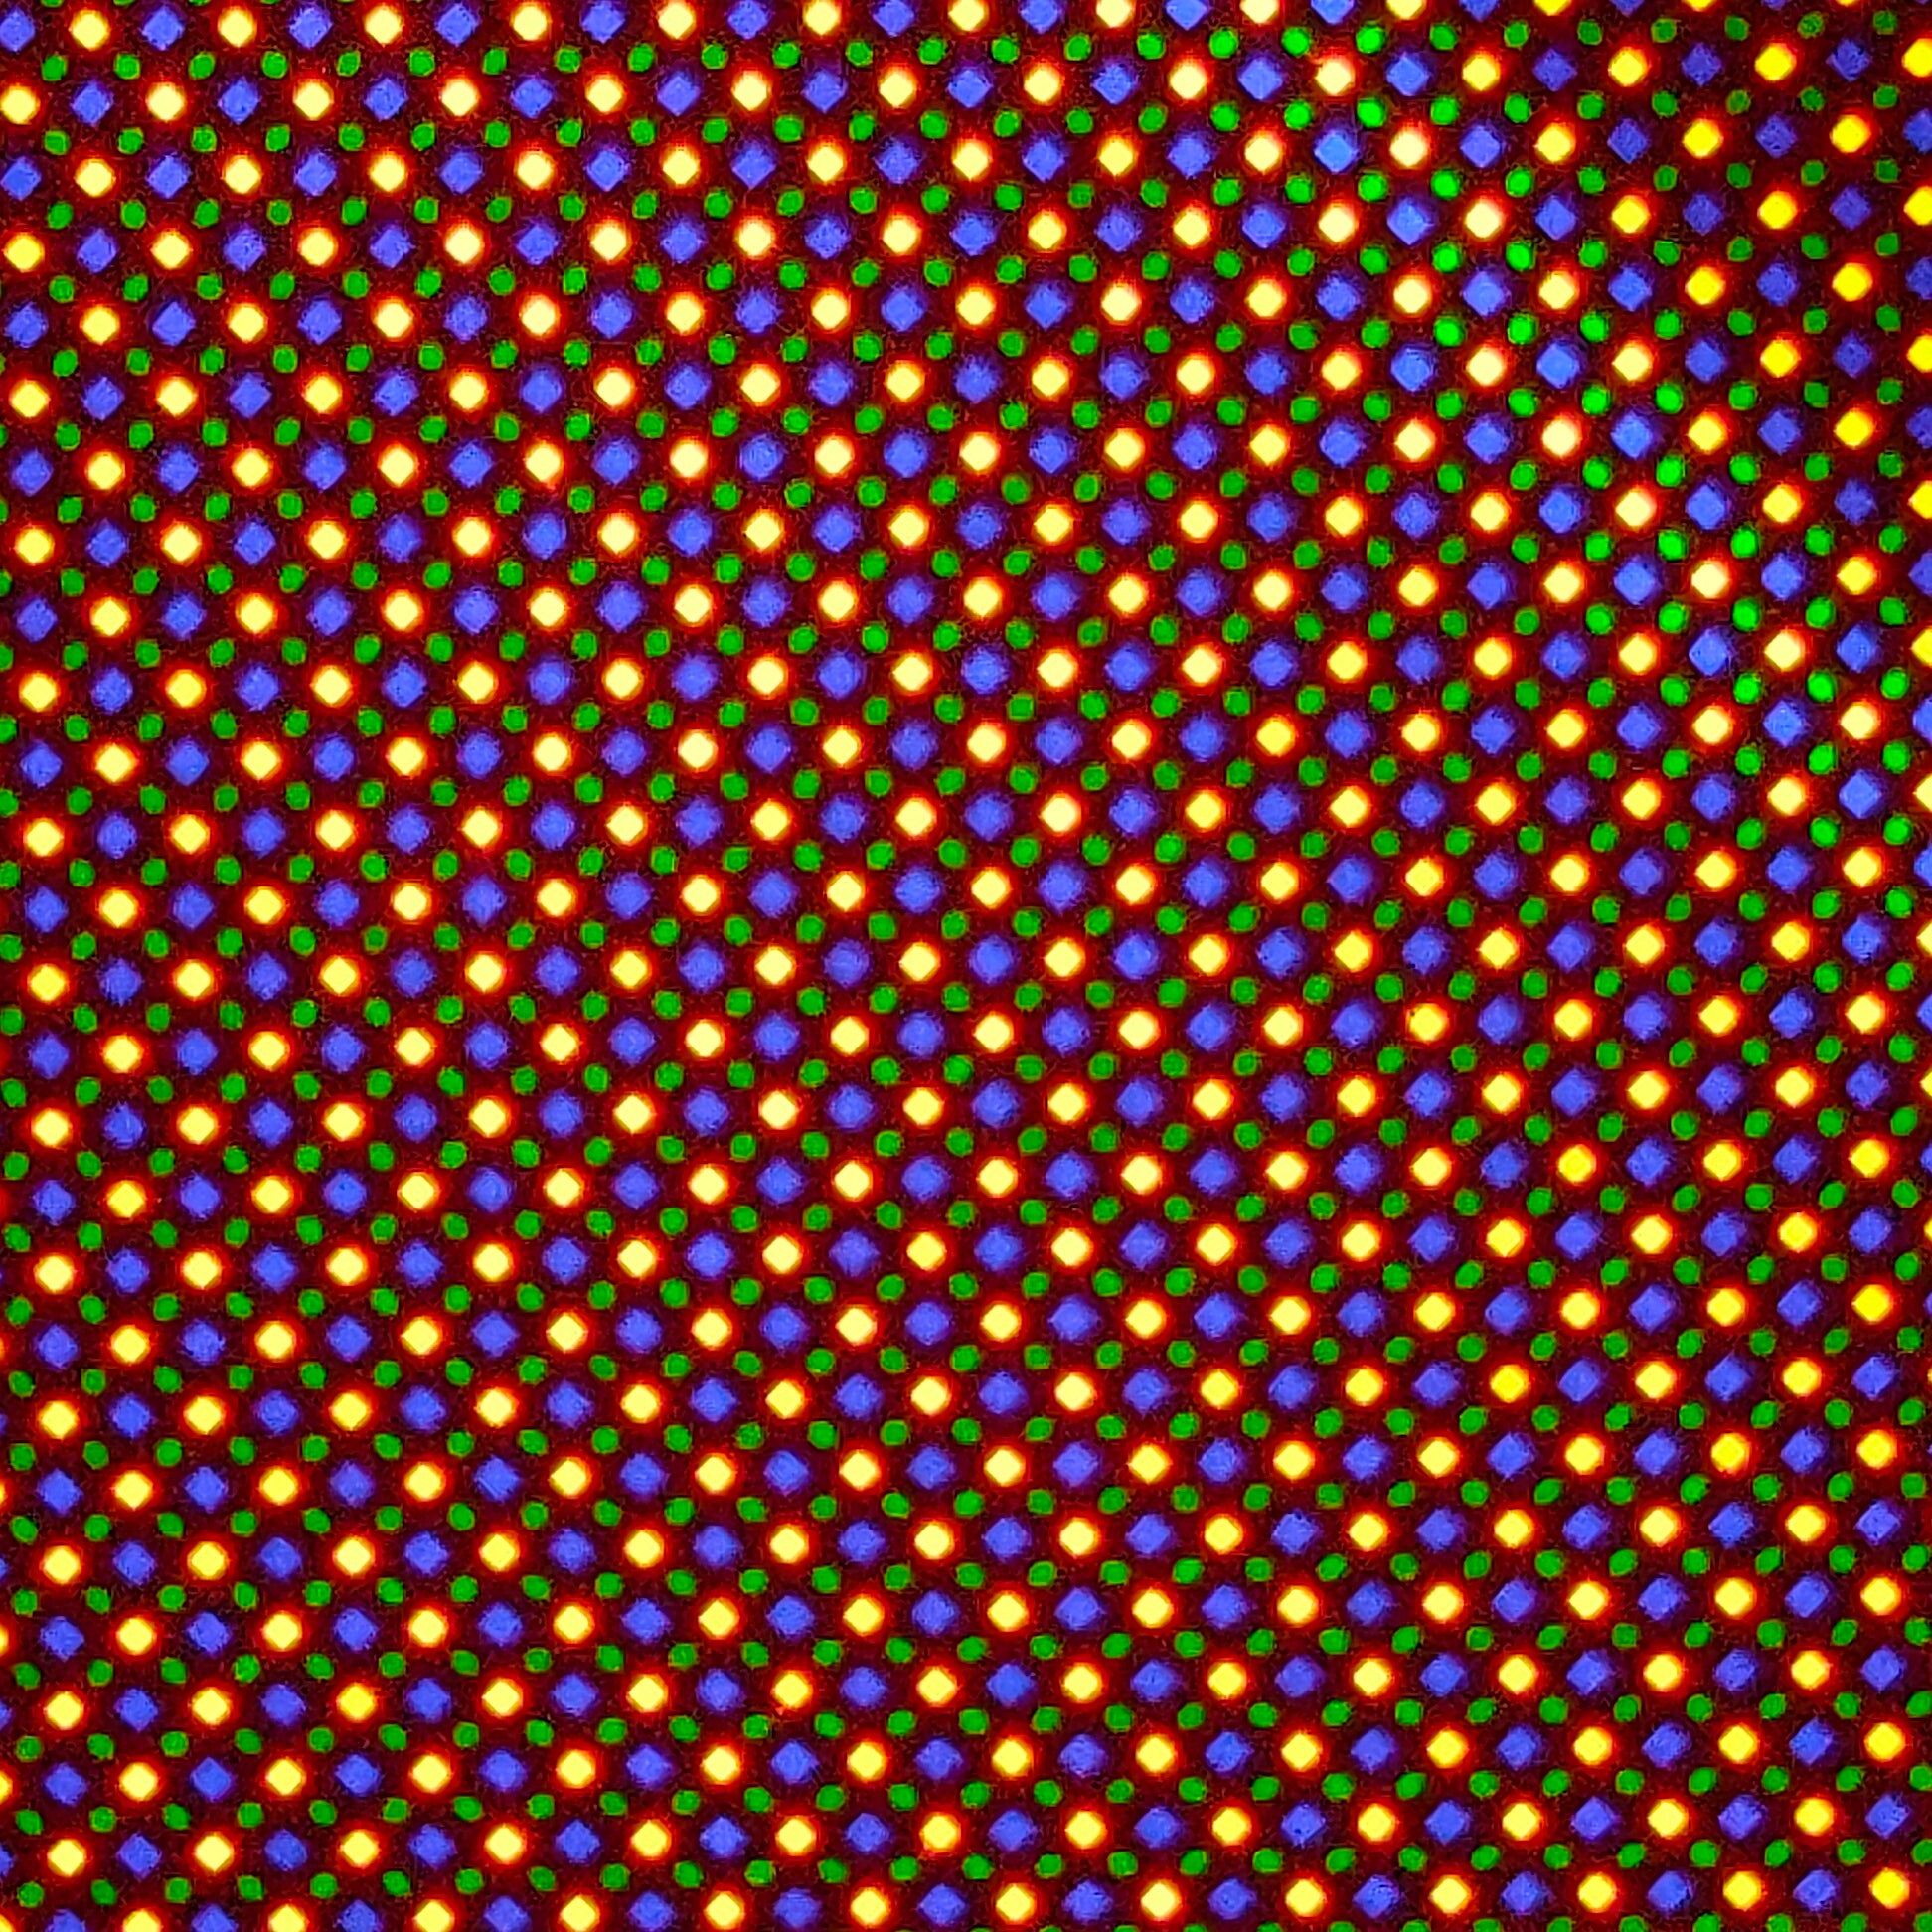 S21 Ultra 'diamond' pixel matrix